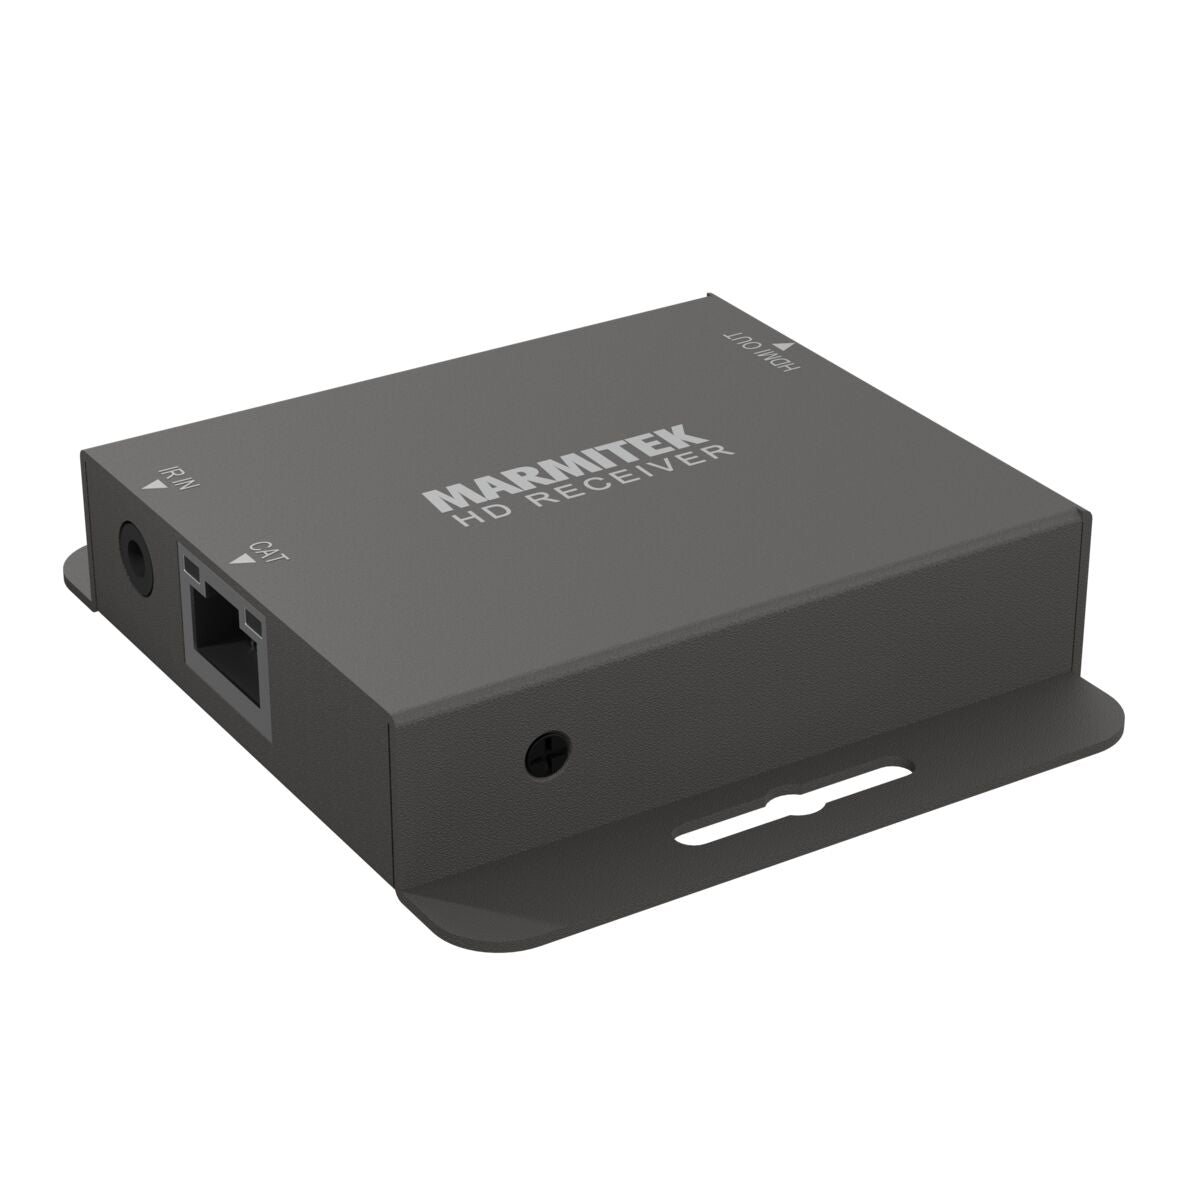 MegaView 67 Pro - HDMI Extender UTP - Top View Image HDMI Receiver | Marmitek